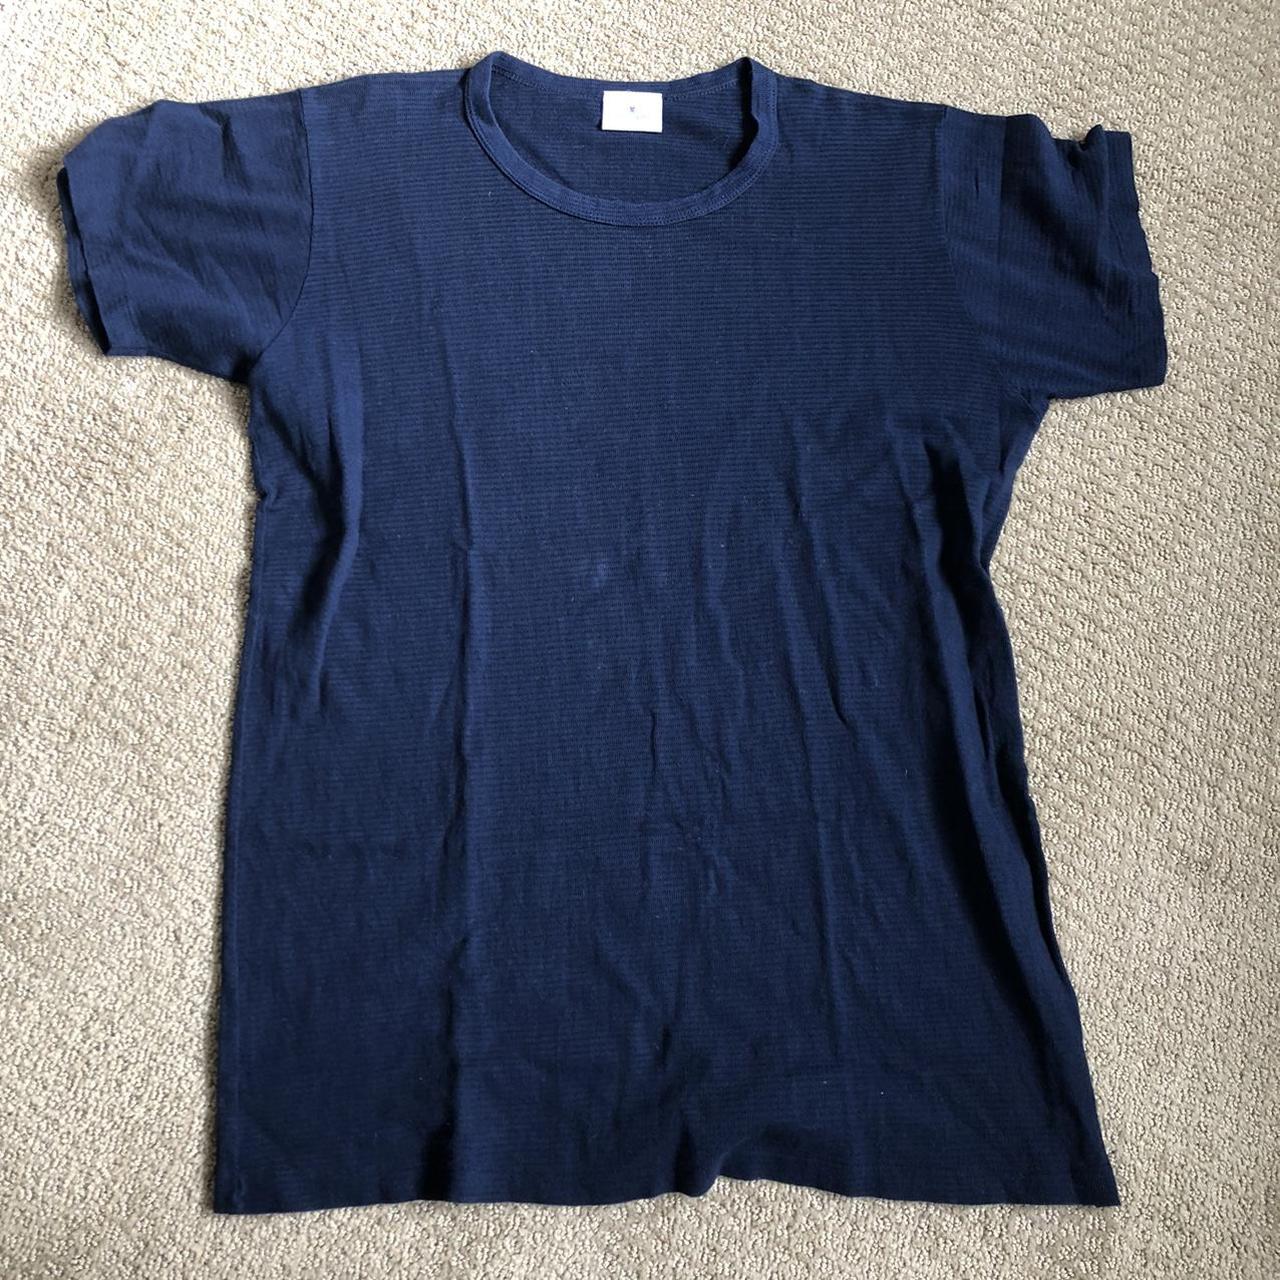 Product Image 1 - VTG Sunspel T-Shirt. super cute